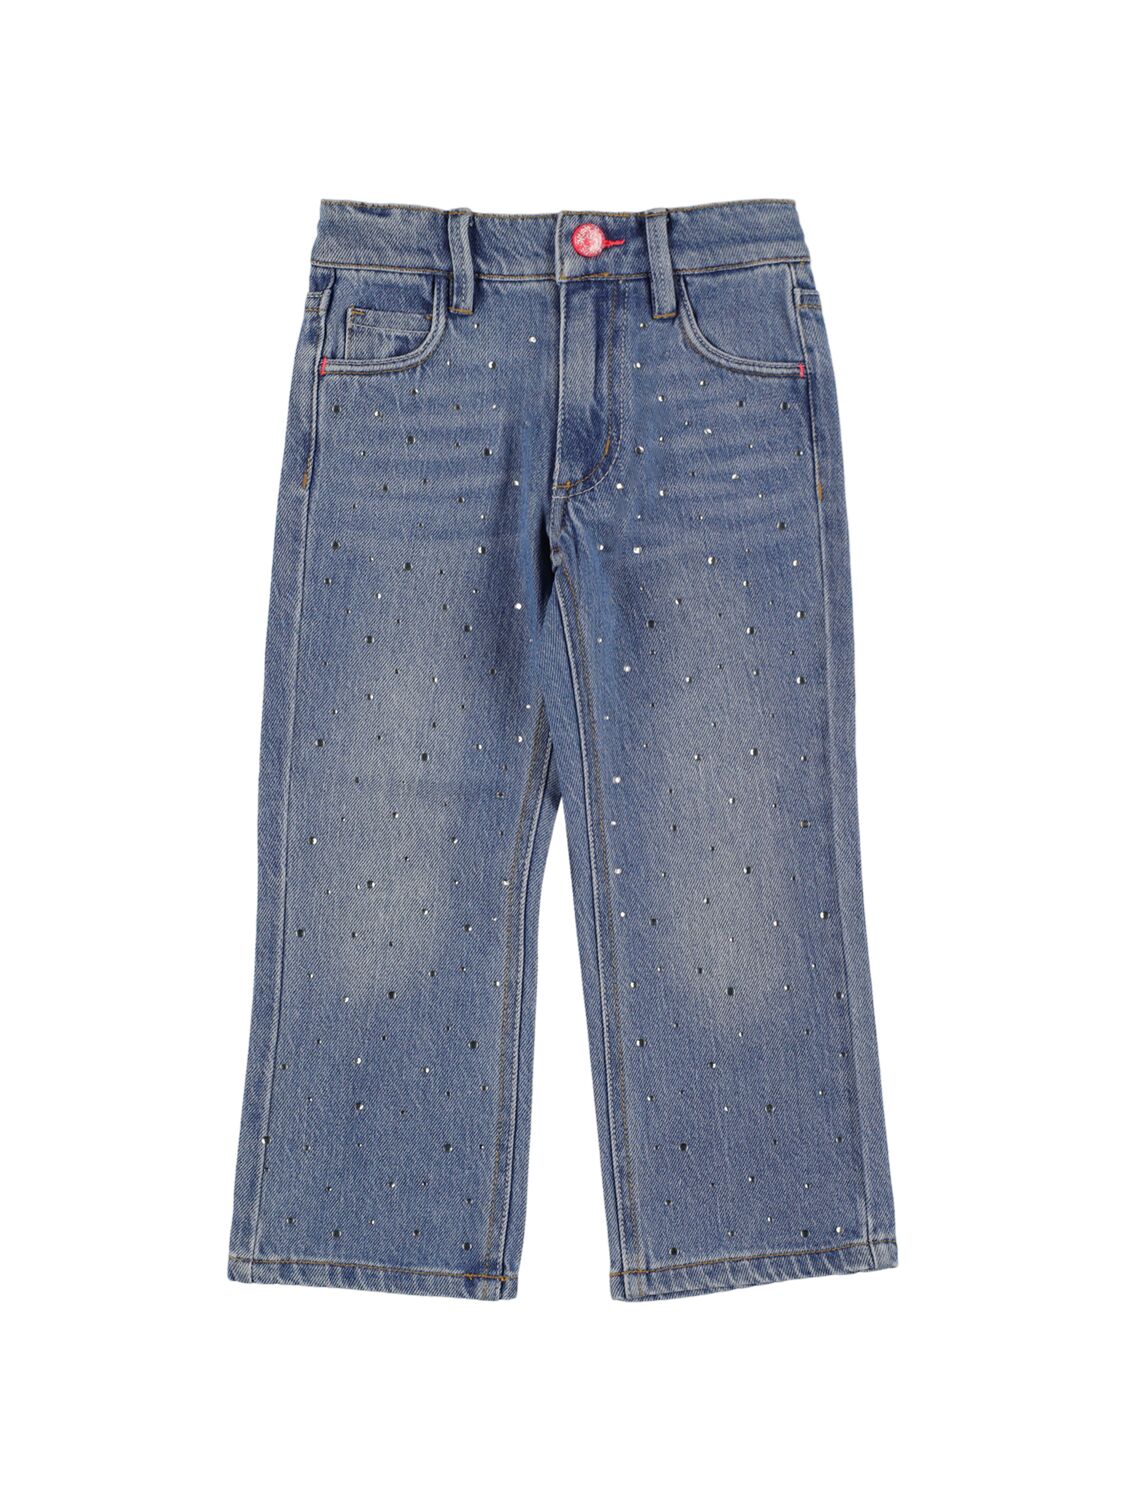 Image of Denim Jeans W/studs